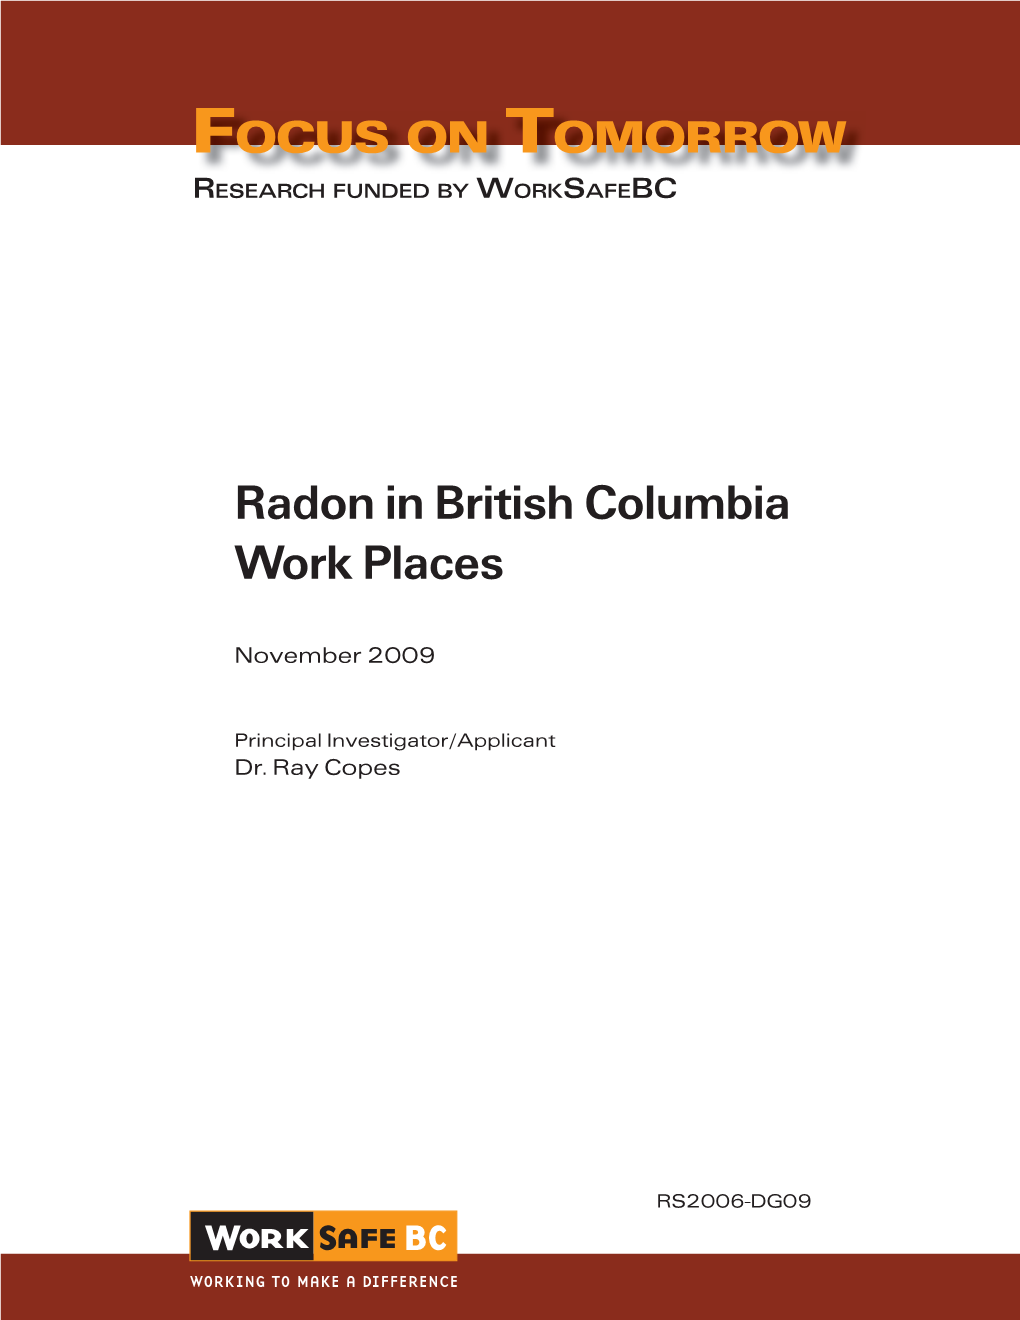 Radon in British Columbia Work Places